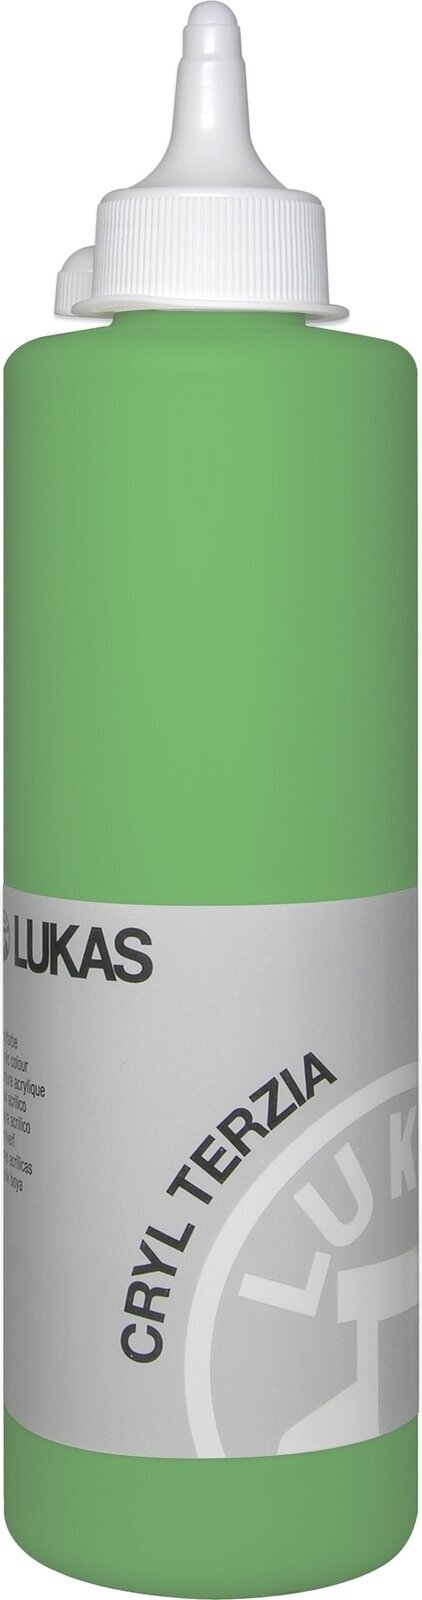 Acrylverf Lukas Cryl Terzia Acrylic Paint Plastic Bottle Acrylverf Chrome Green Light Hue 500 ml 1 stuk